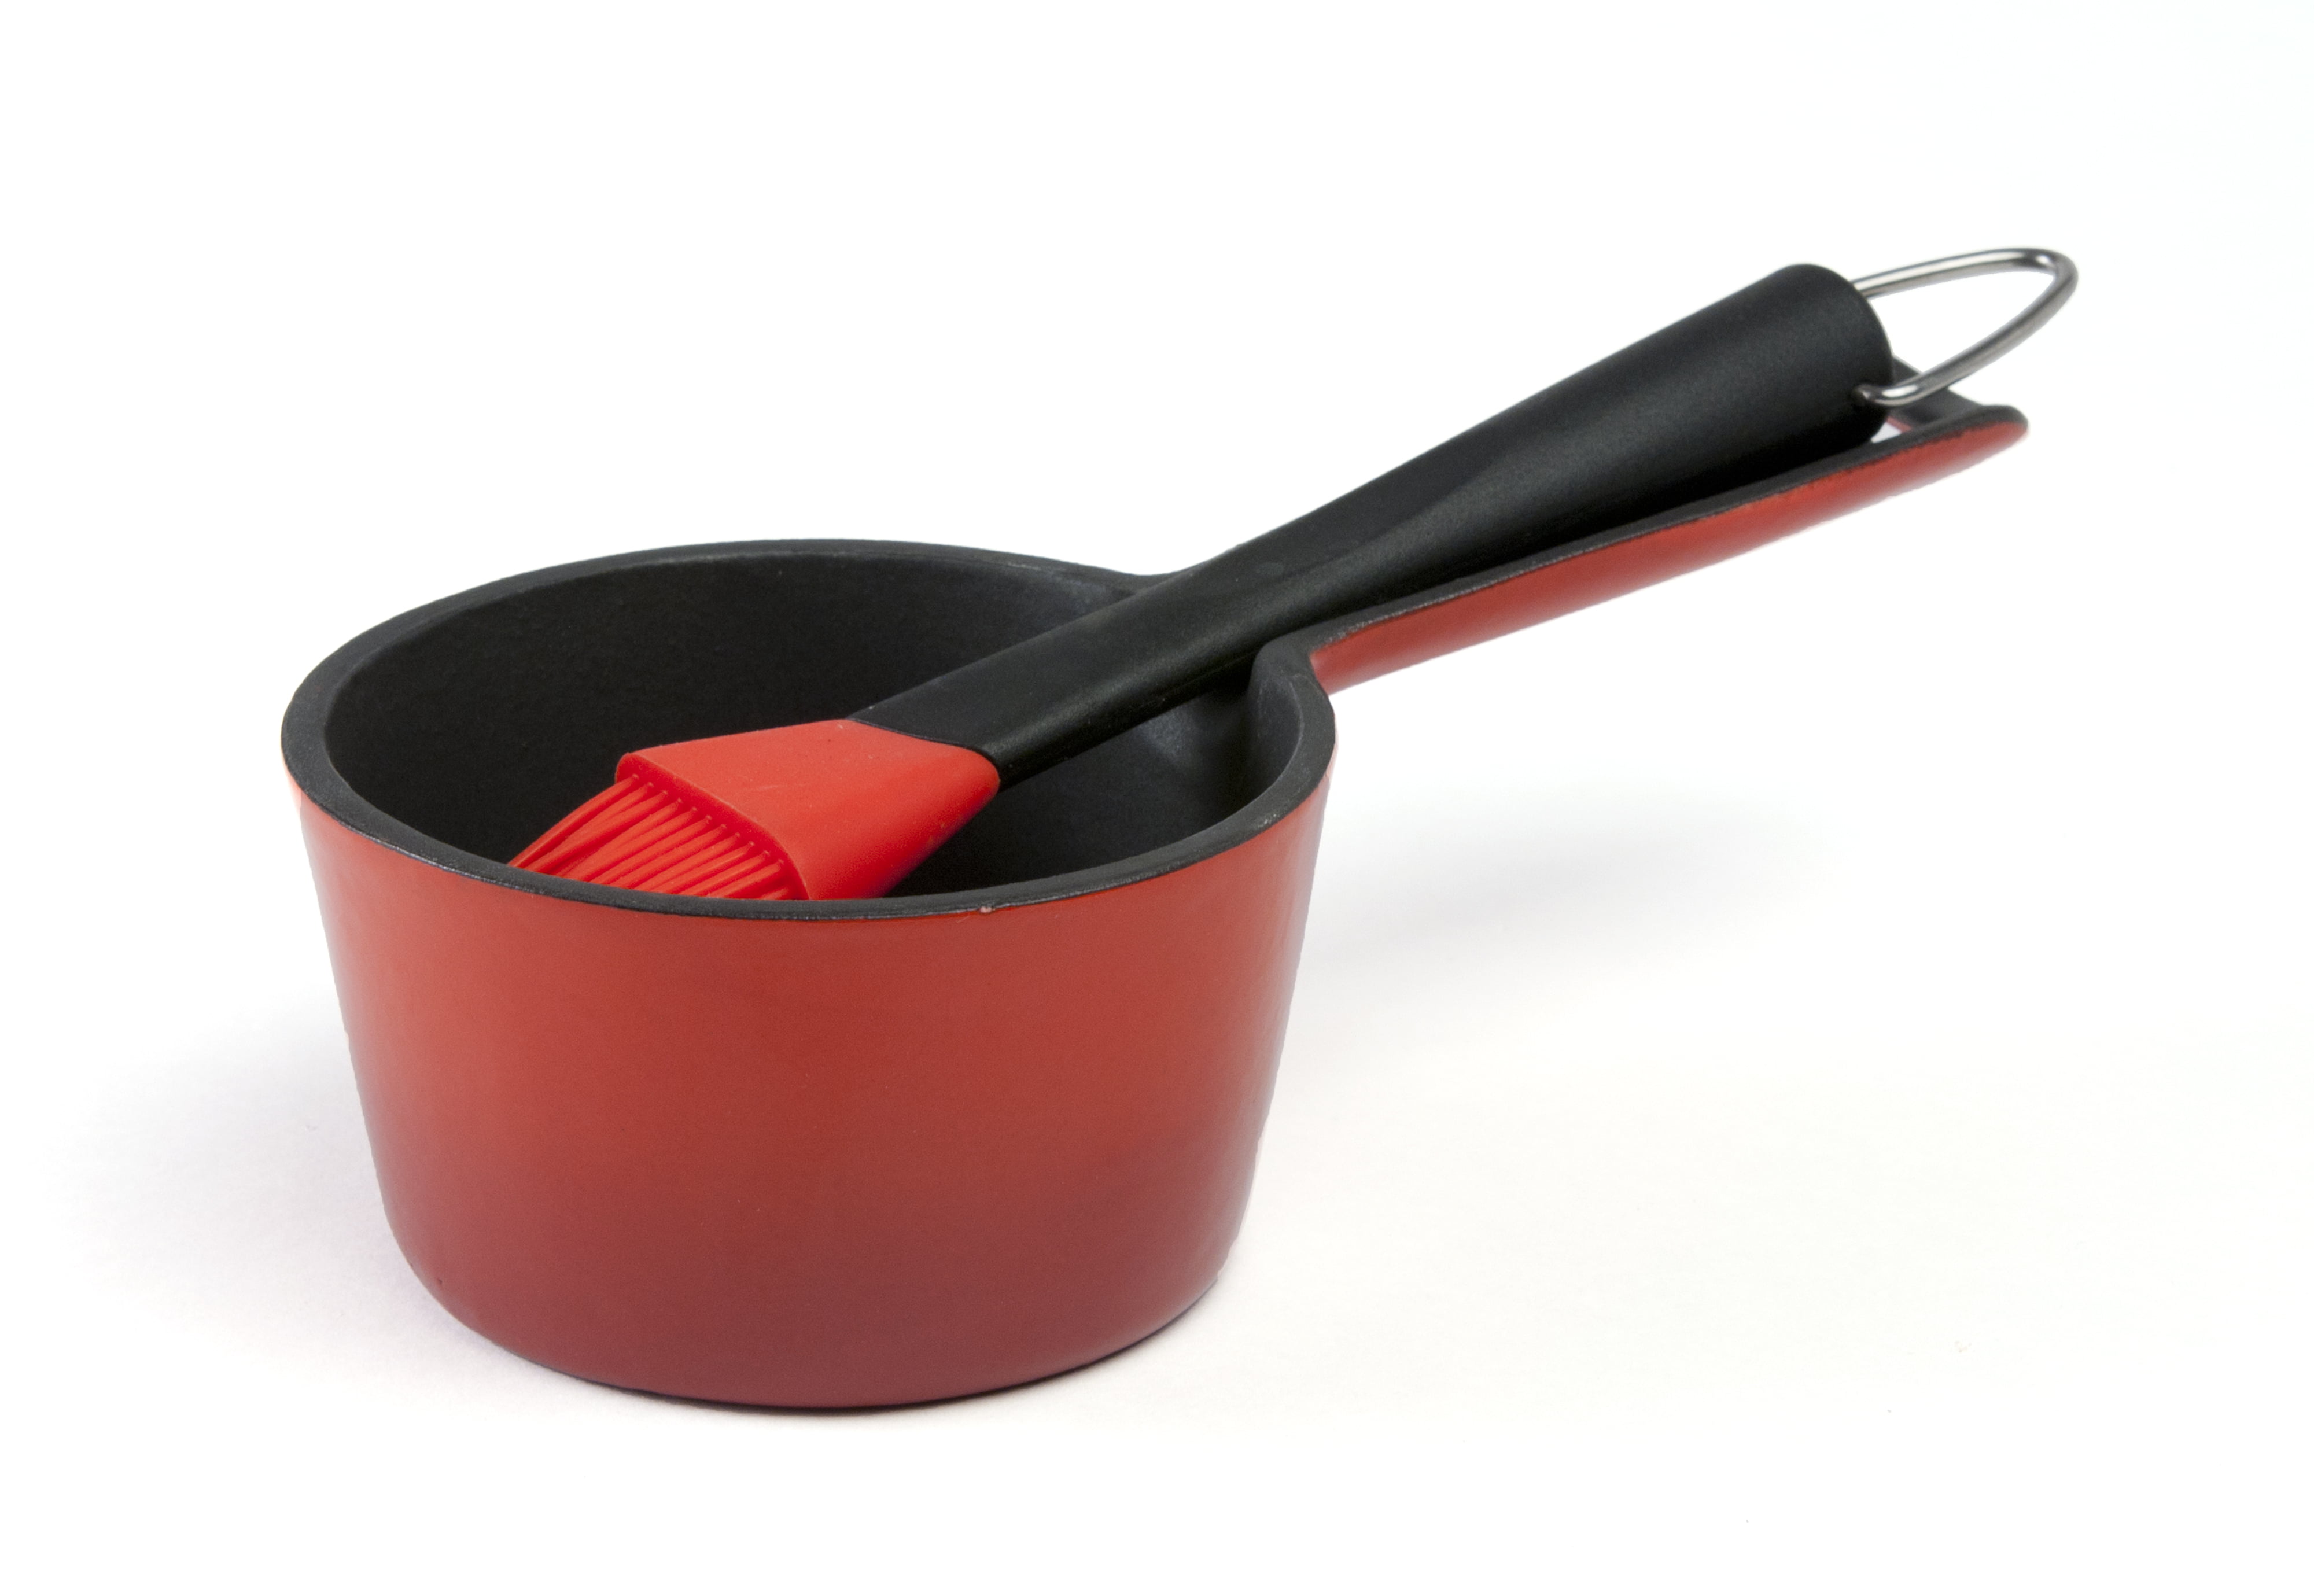 Charcoal Companion CC5099 Cast Iron Sauce Pan with Silicone Head Basting Brush